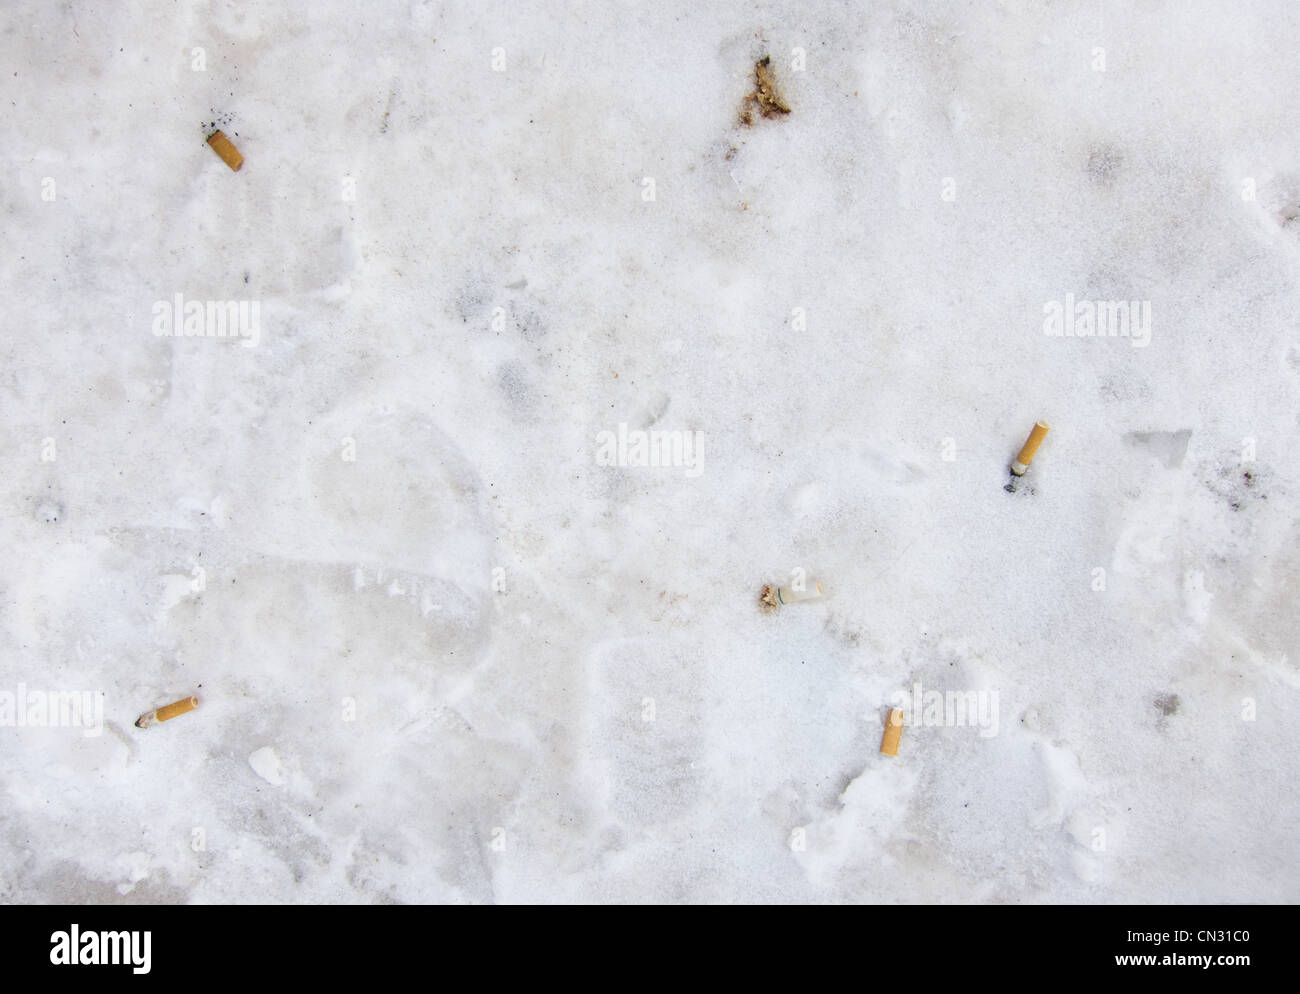 Zigarettenkippen im Schnee Stockfoto